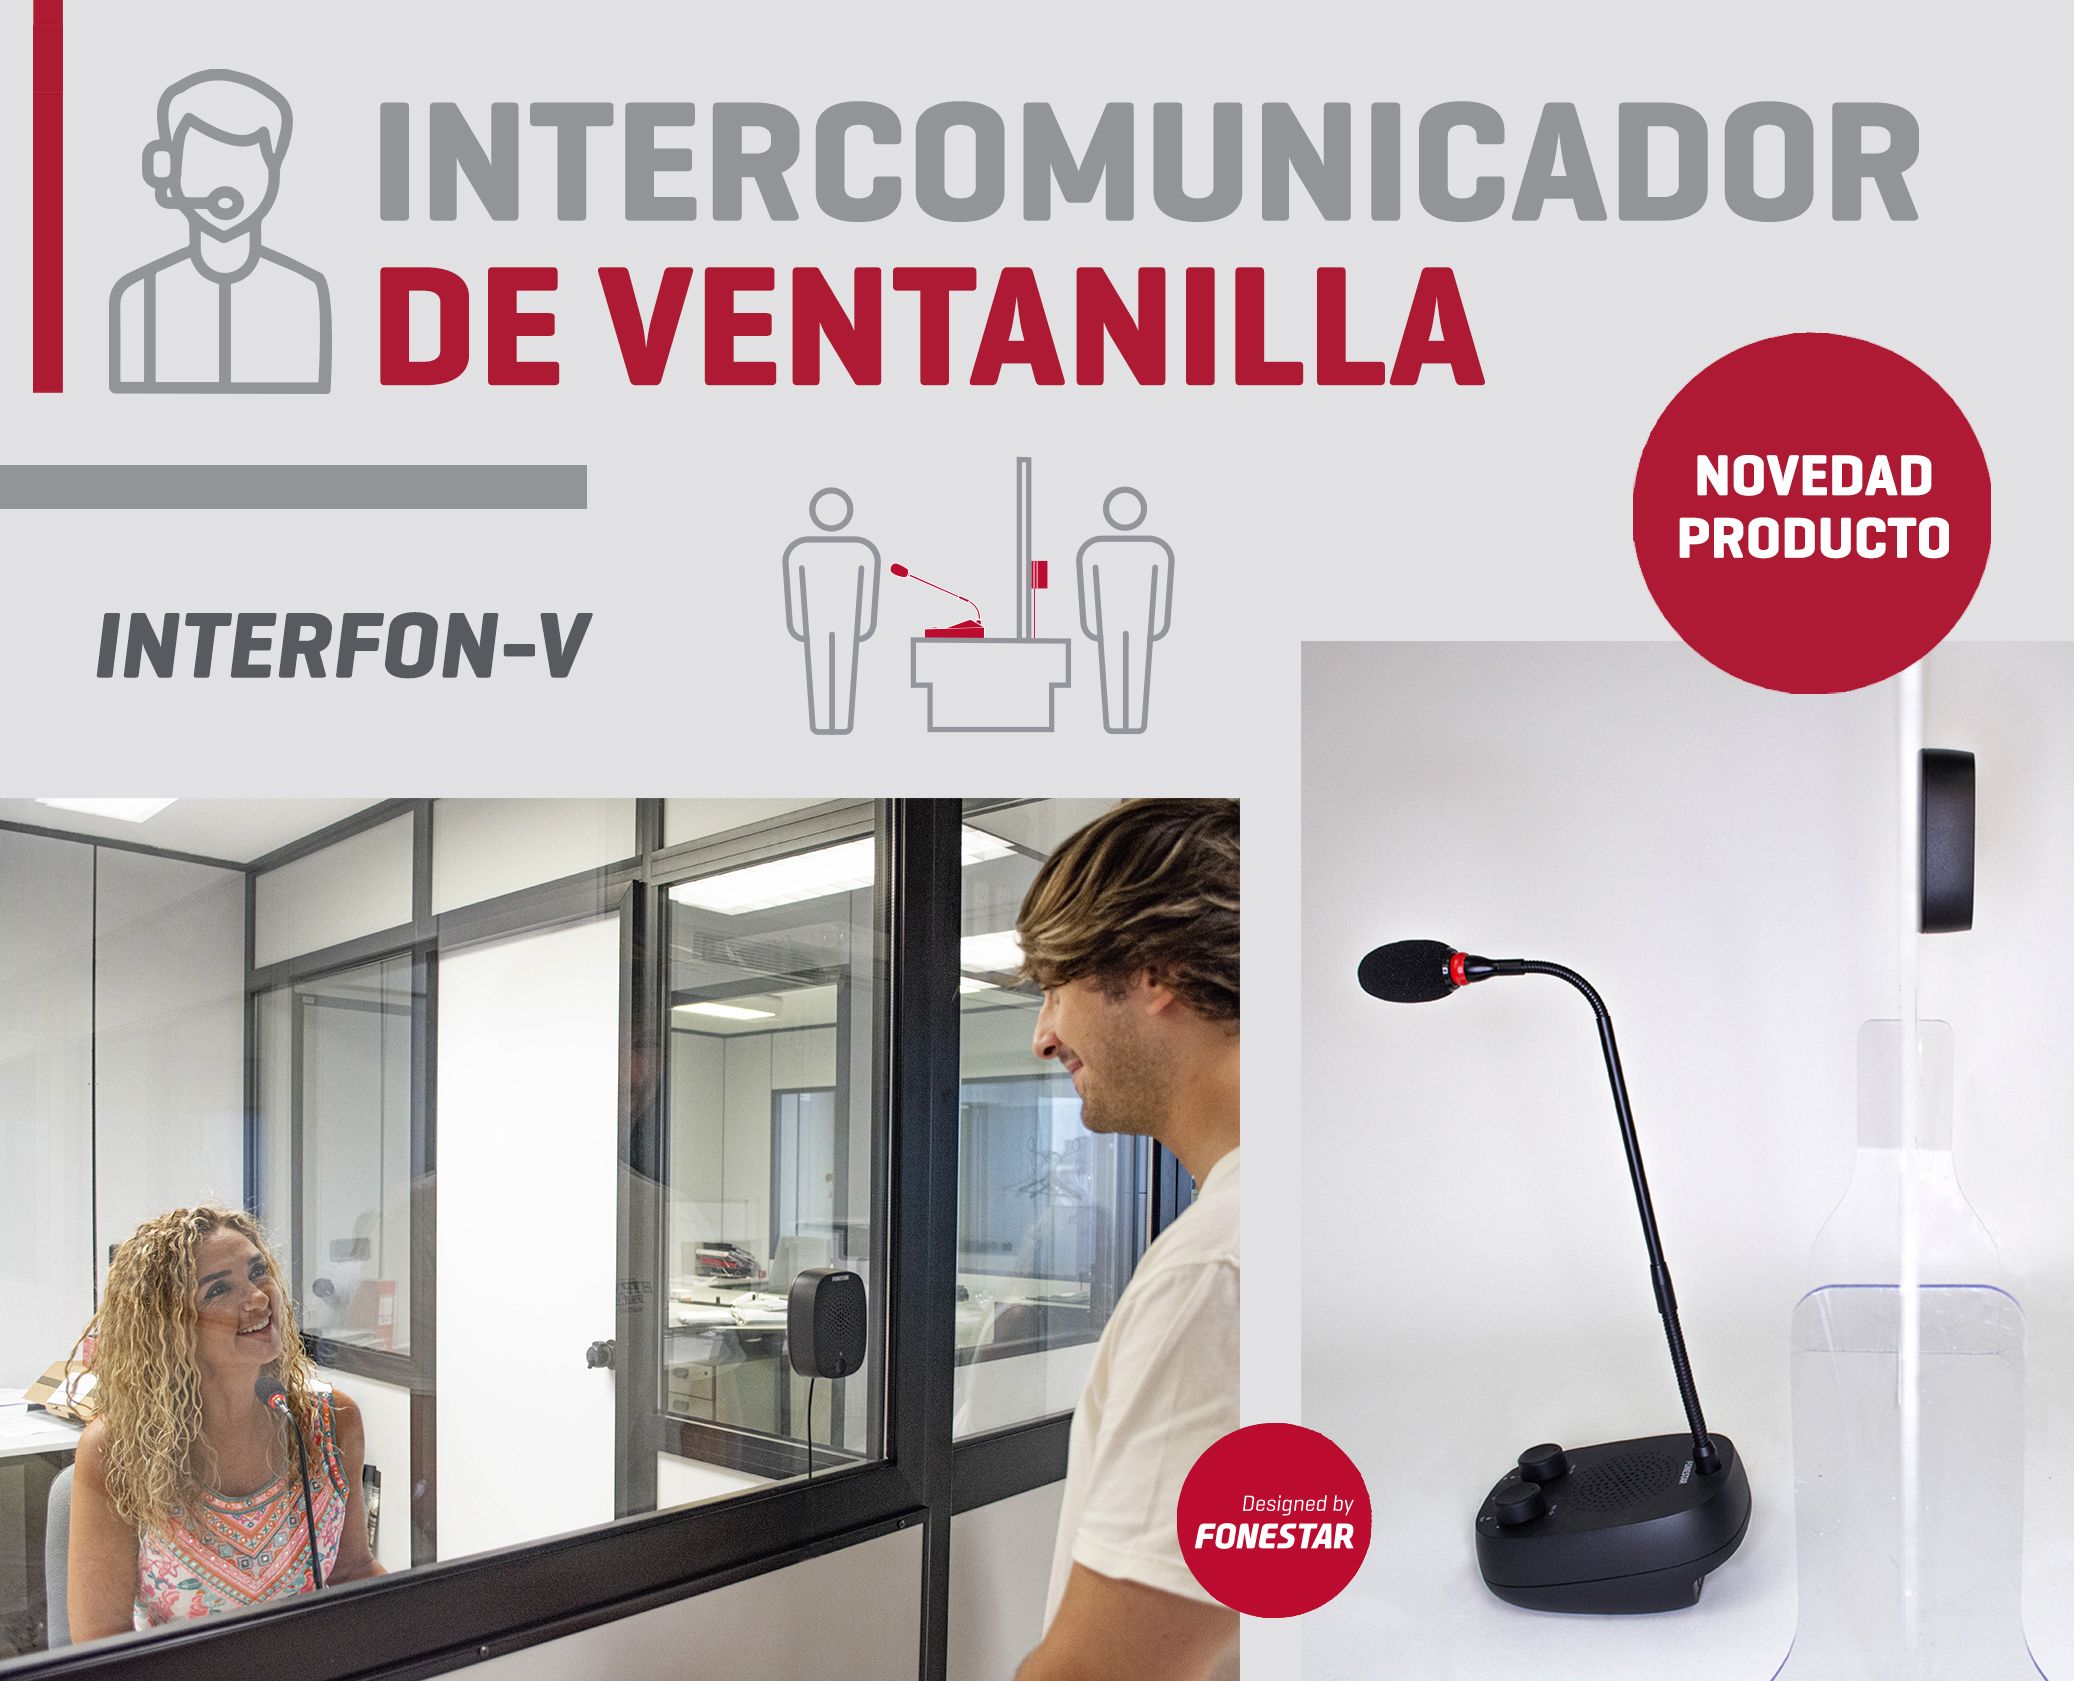 Introducing the new window intercom: INTERFON-V